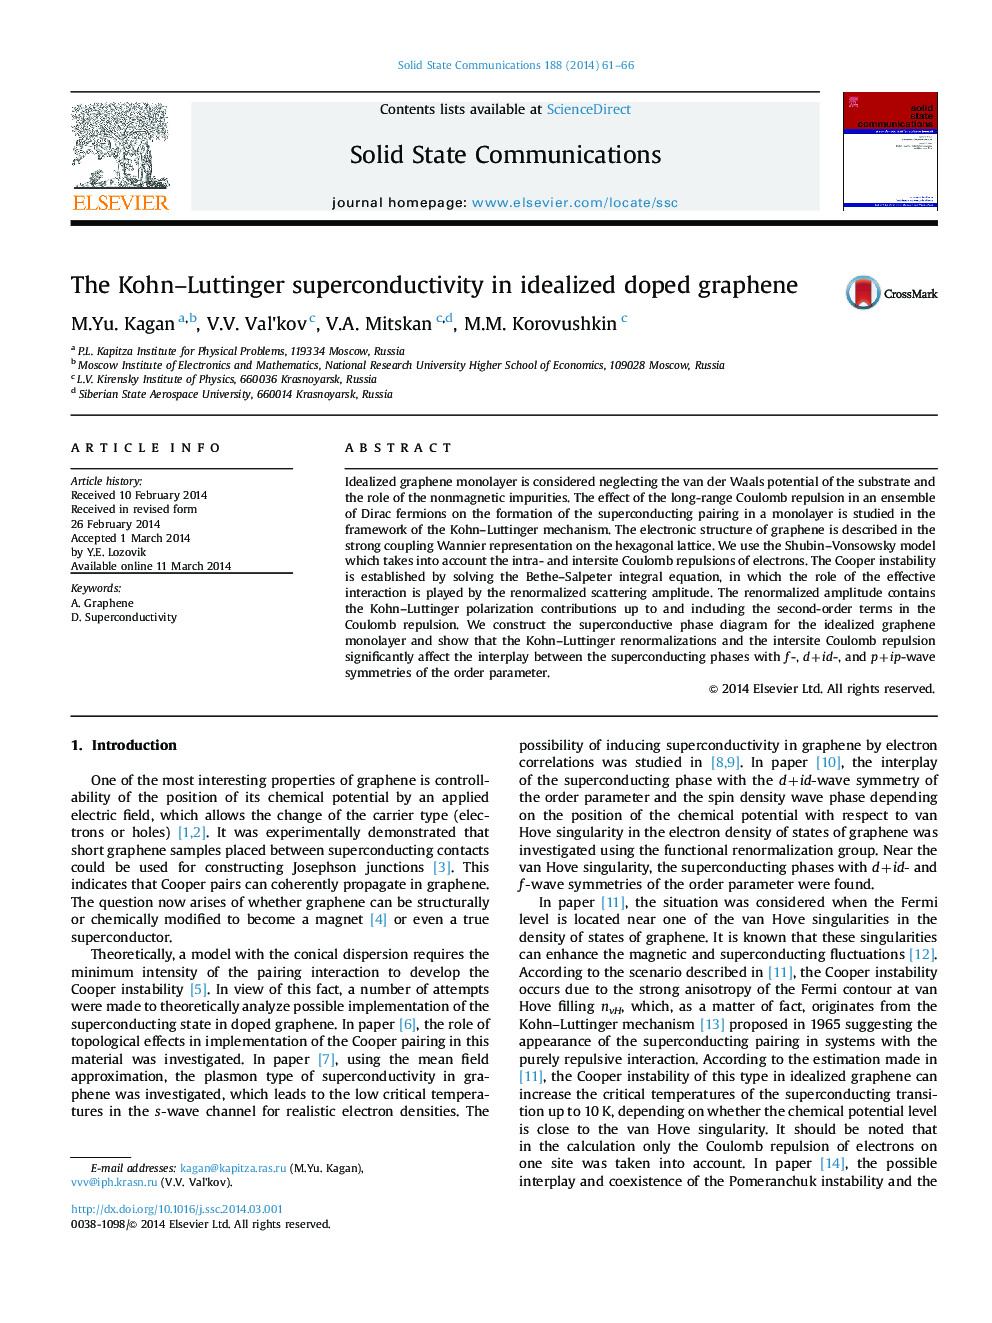 The Kohn–Luttinger superconductivity in idealized doped graphene